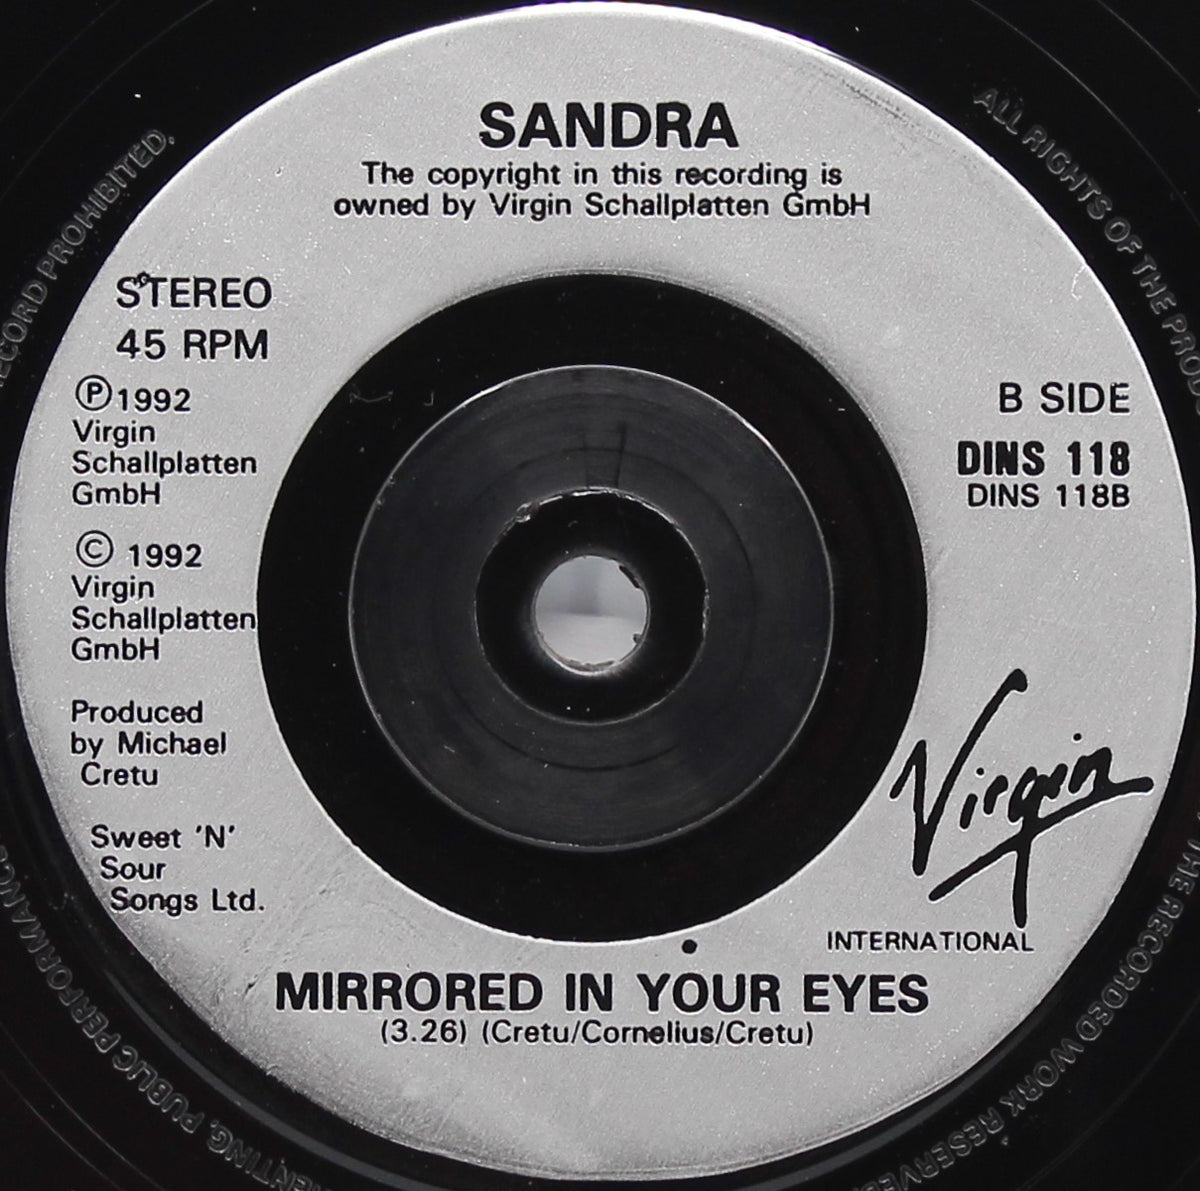 Sandra – Johnny Wanna Live, Vinyl, 7&quot;, 45 RPM, Single, UK 1992